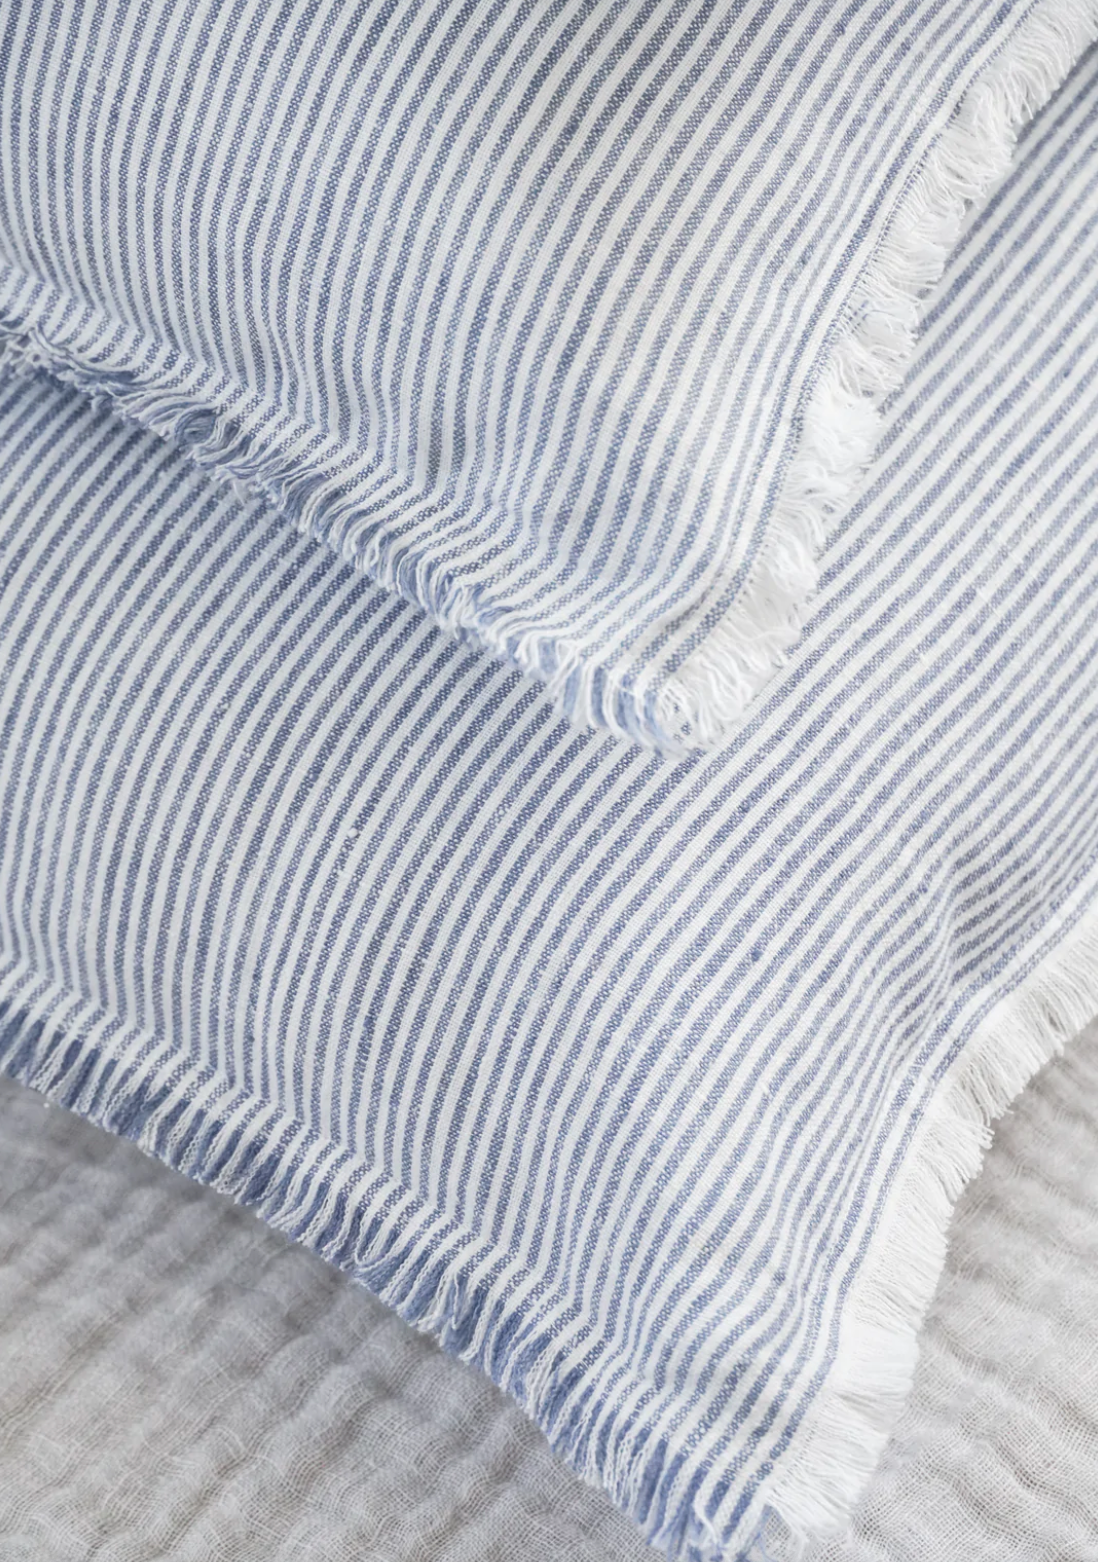 Chambray Blue & White Linen Pillows